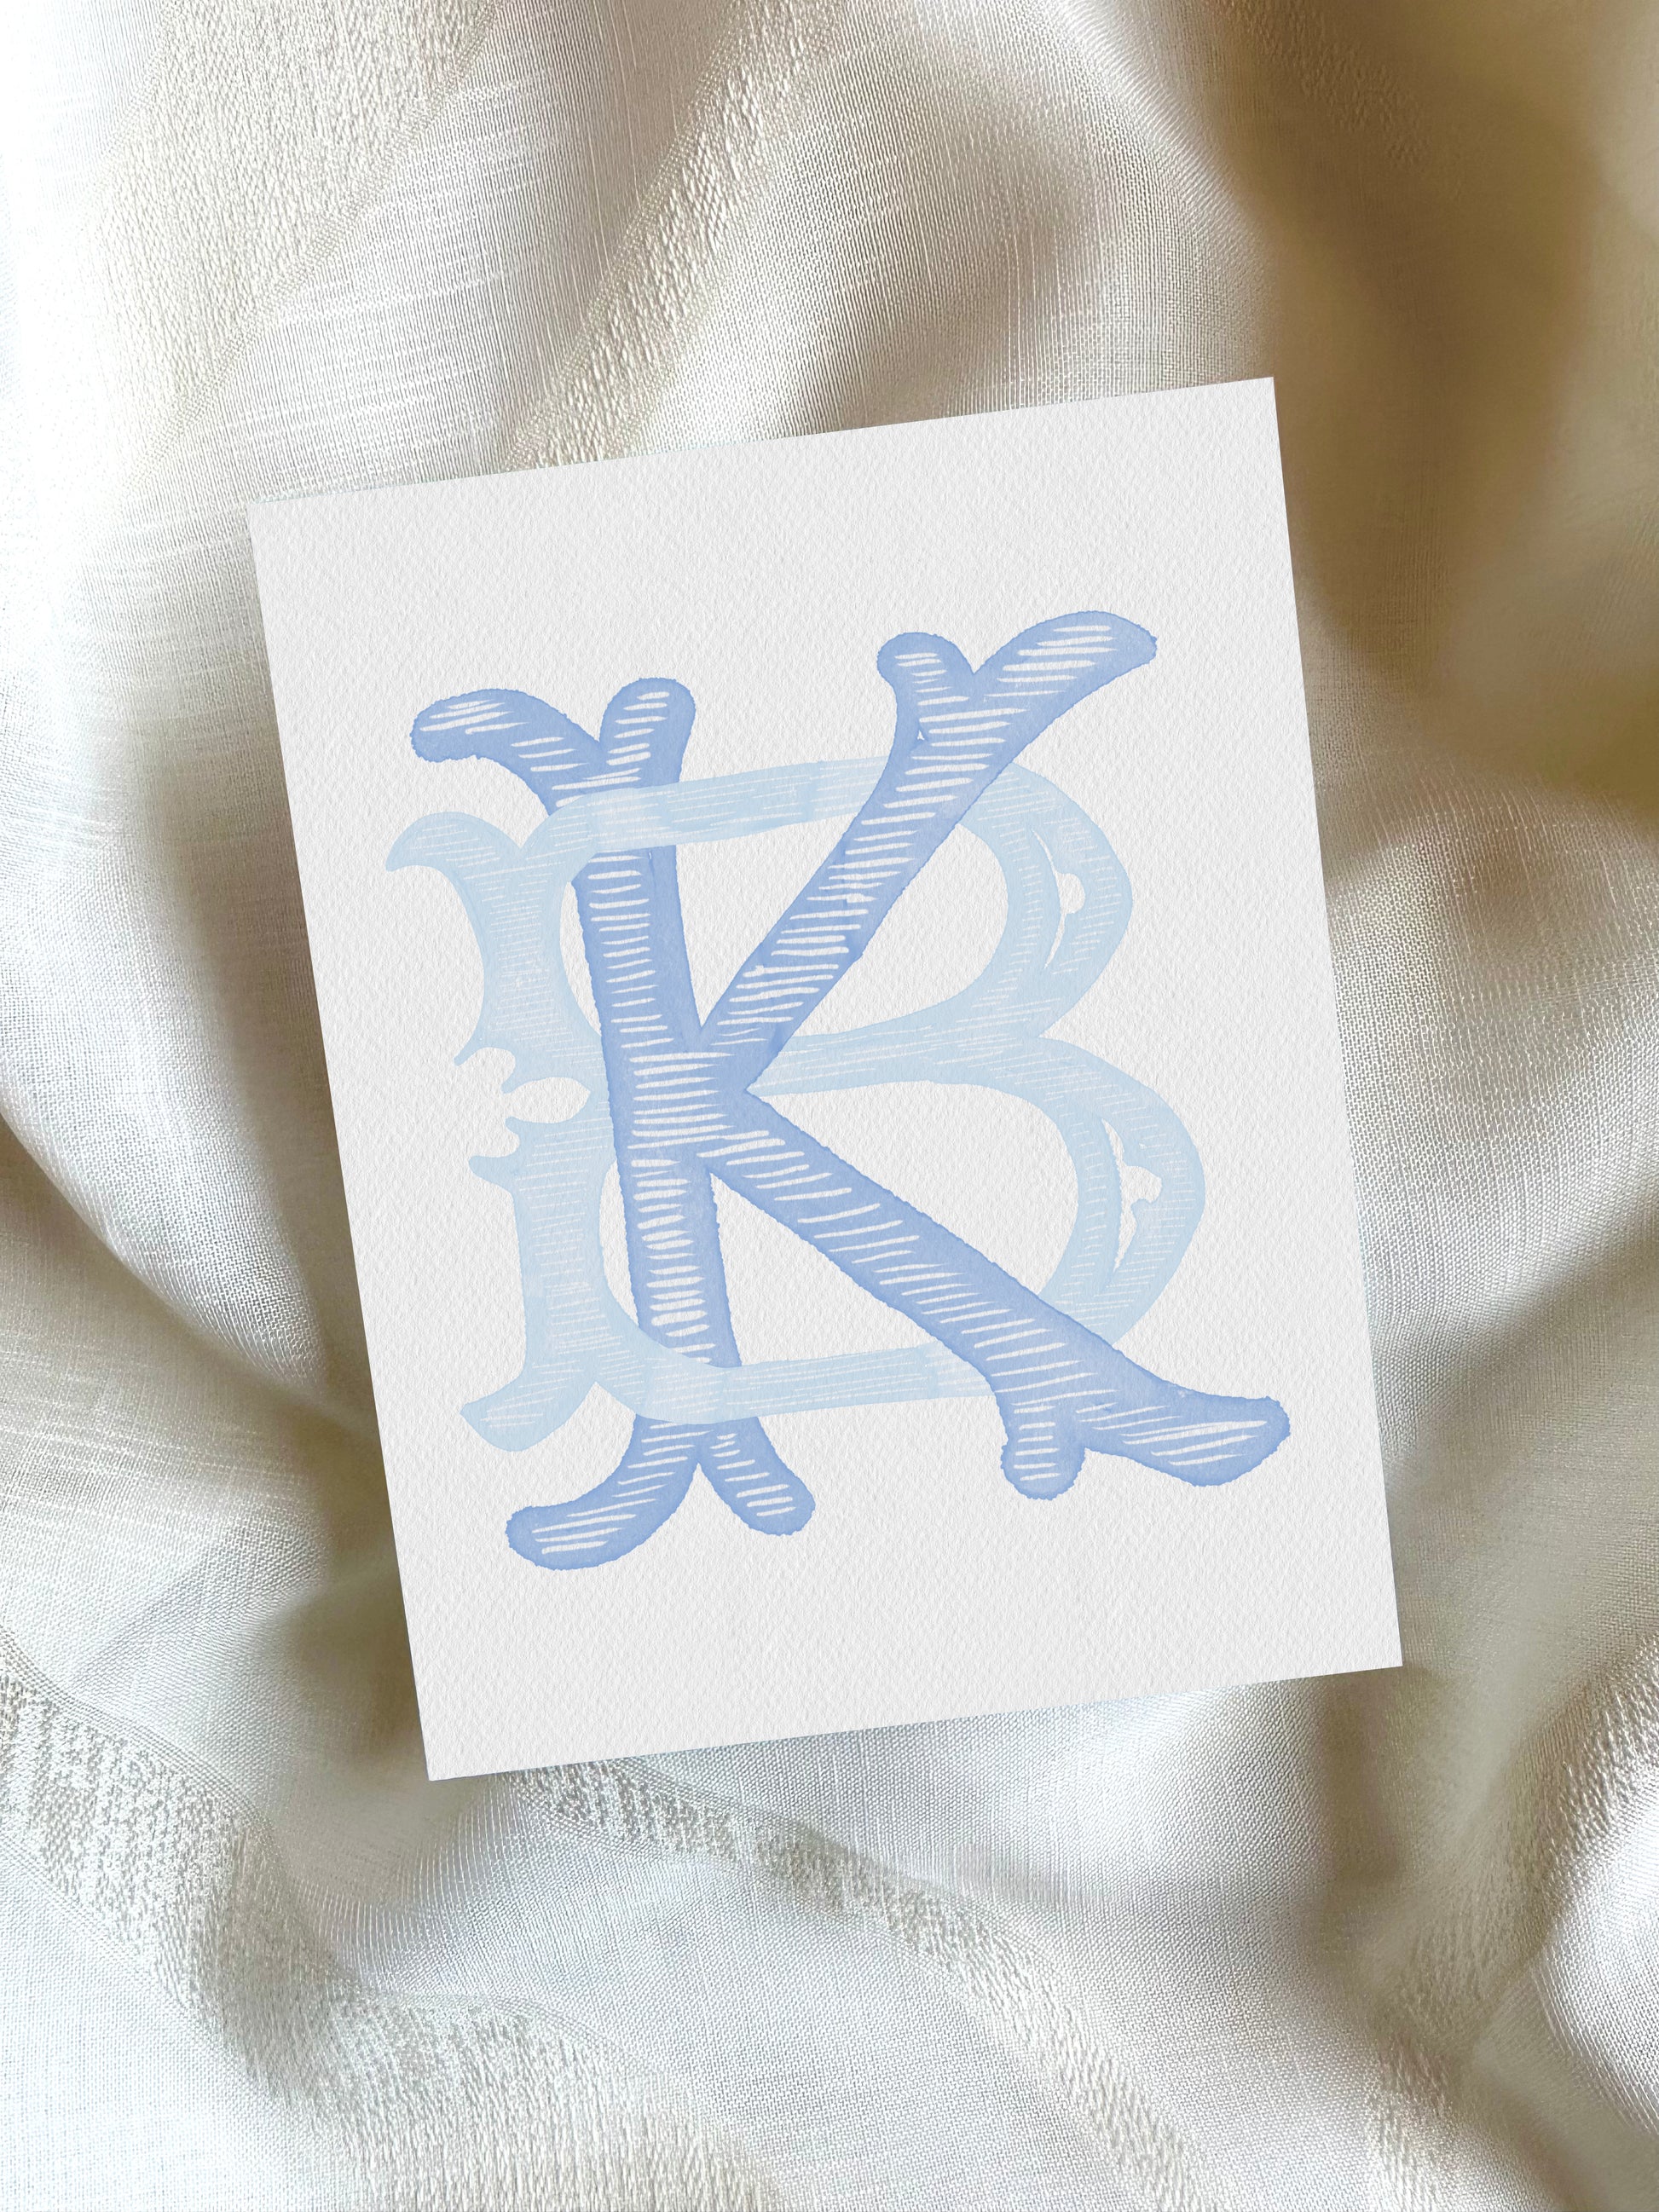 2 Letter Monogram with Letters BK KB | Digital Download - Wedding Monogram SVG, Personal Logo, Wedding Logo for Wedding Invitations The Wedding Crest Lab